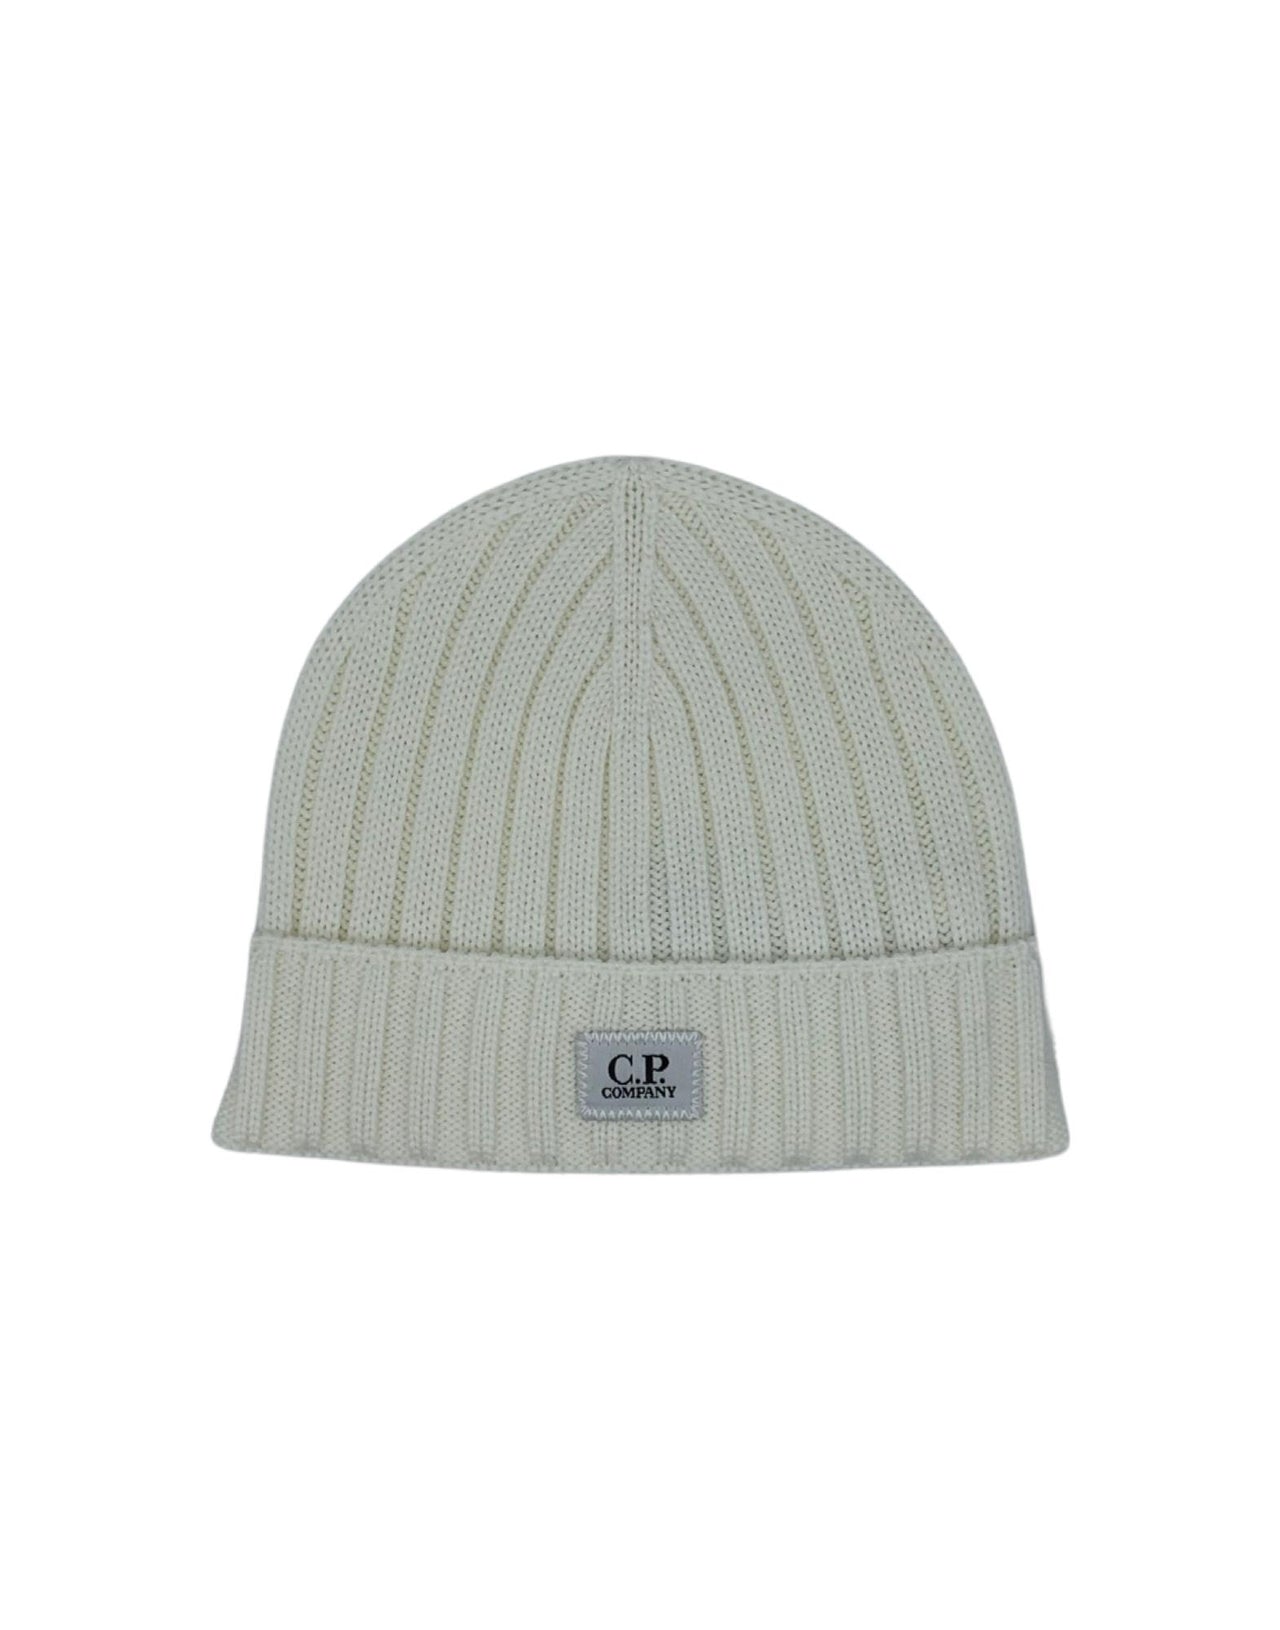 C.p. Company white hat